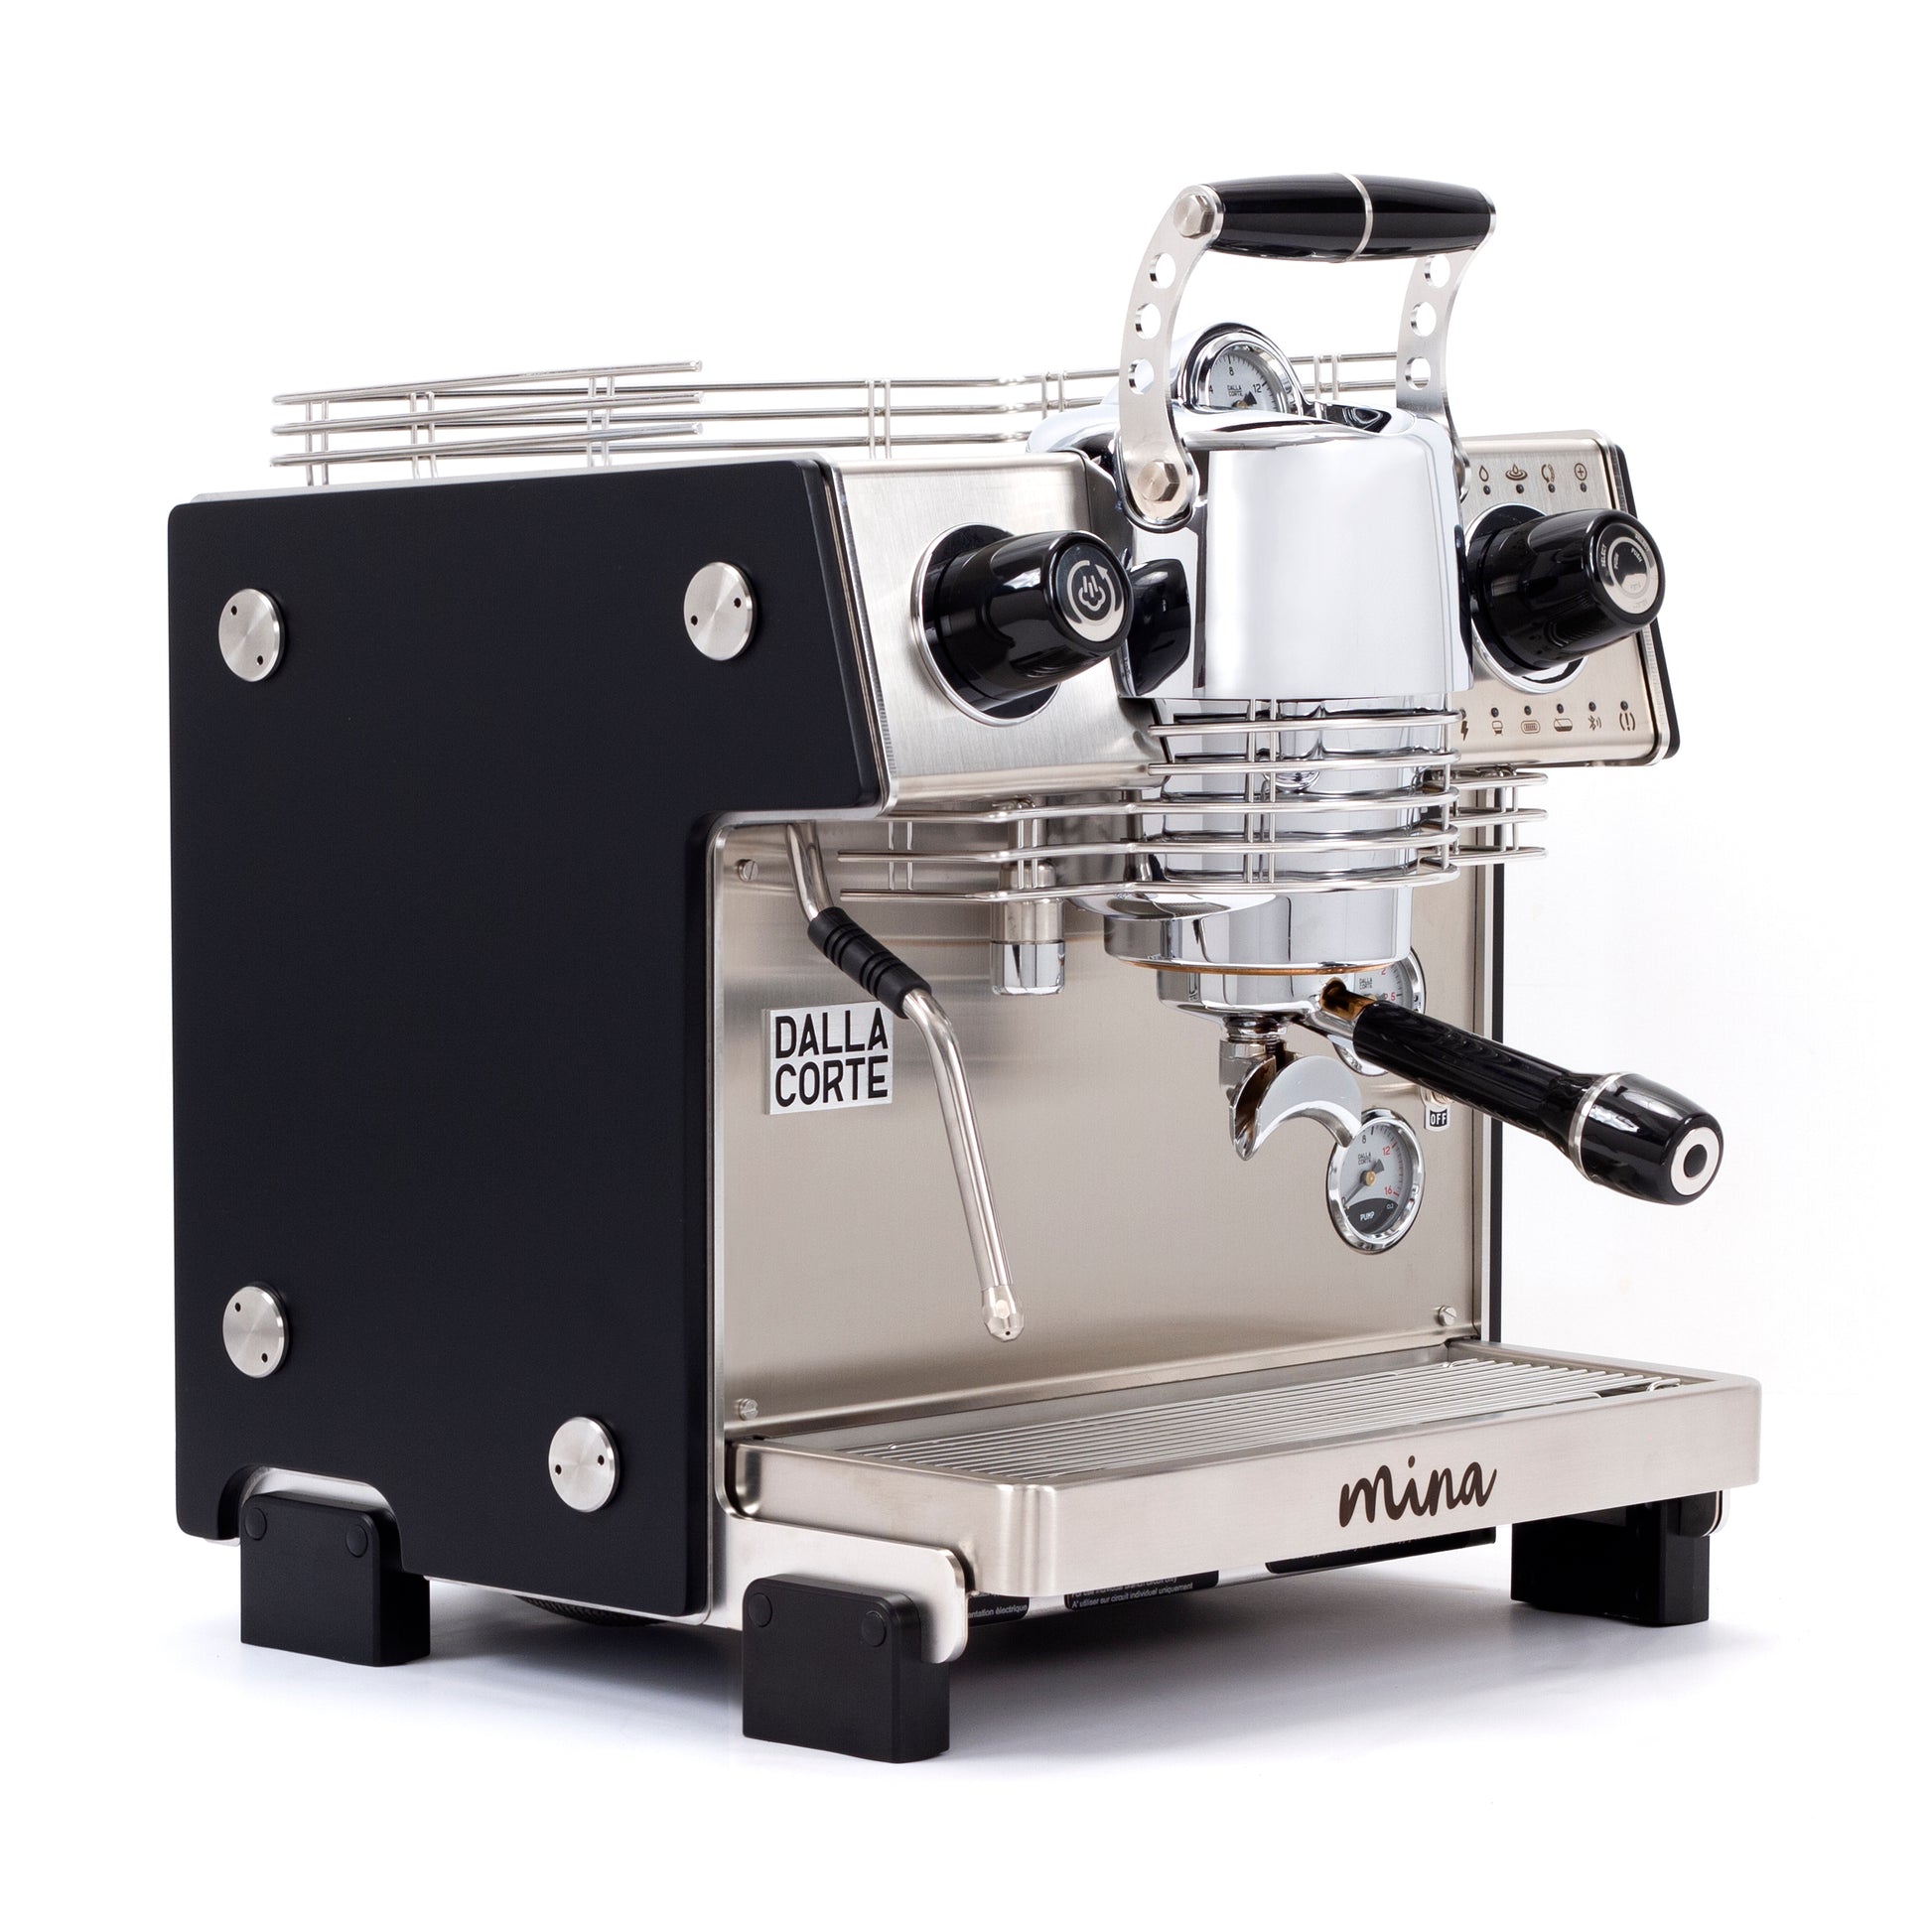 Barista System Coffee and Espresso Machine Combo, Black coffee maker  Kitchen Appliances Home Appliances - AliExpress